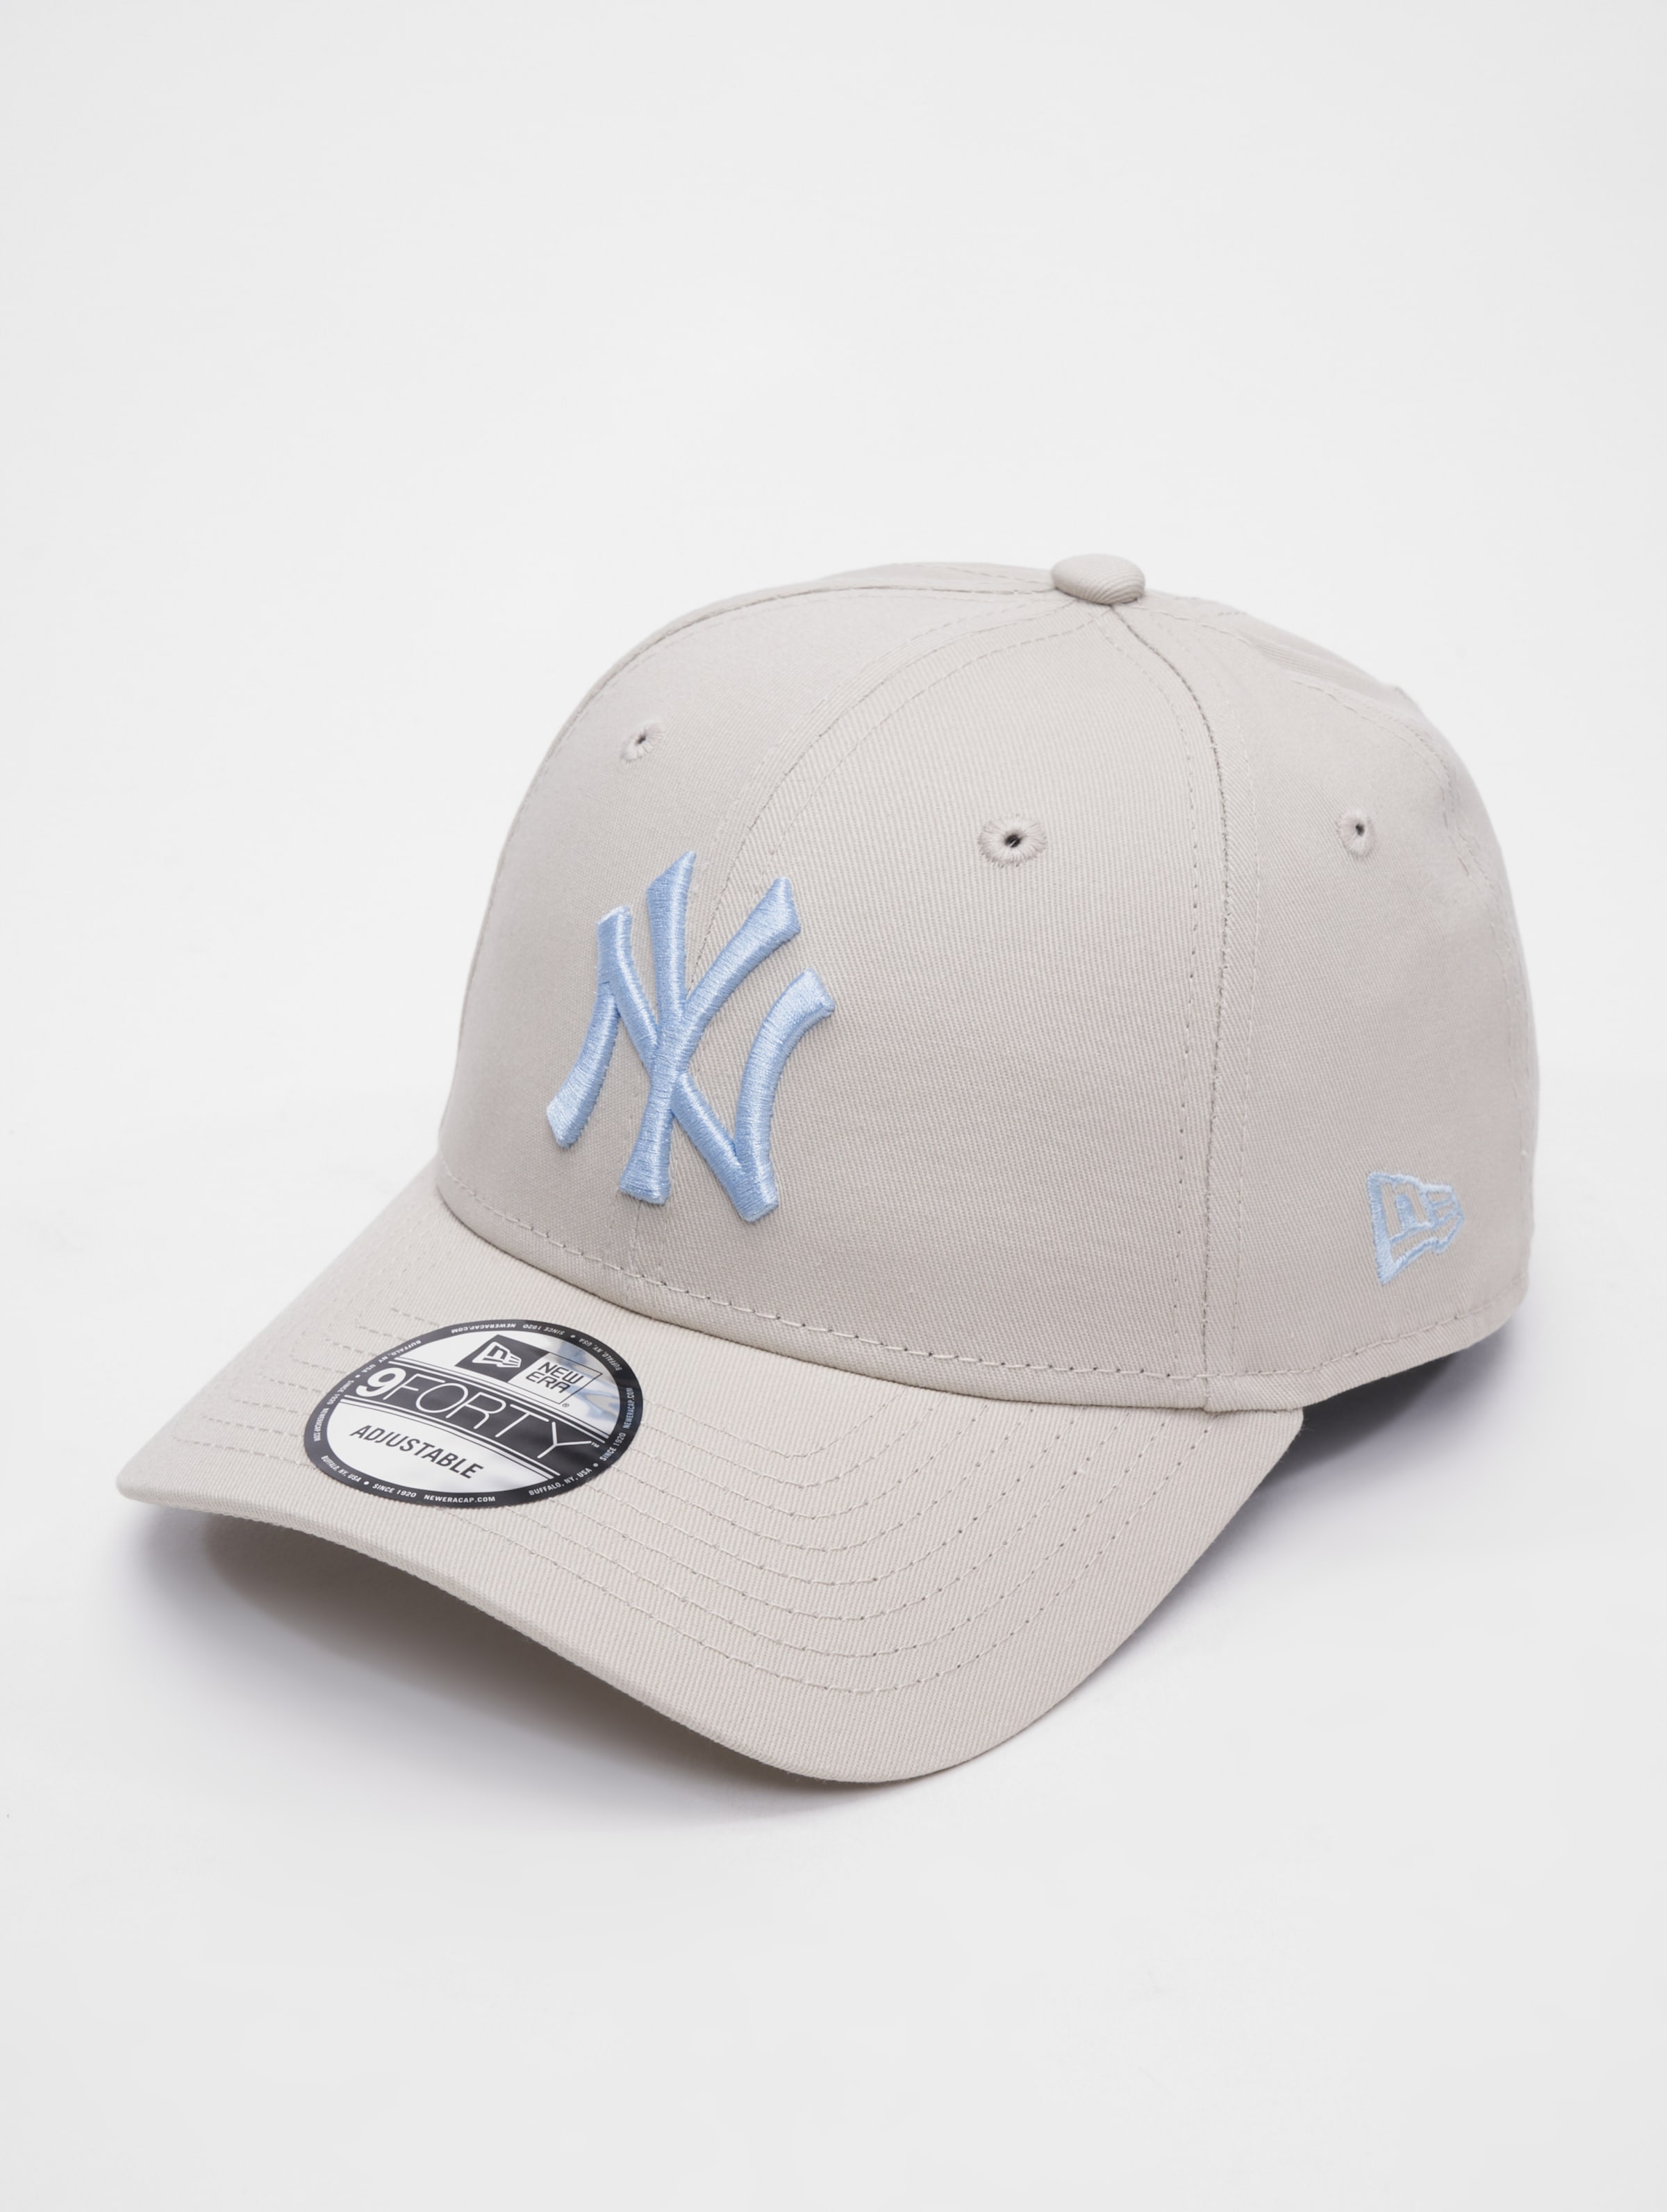 New Era - New York Yankees League Essential Light Beige 9FORTY Adjustable Cap